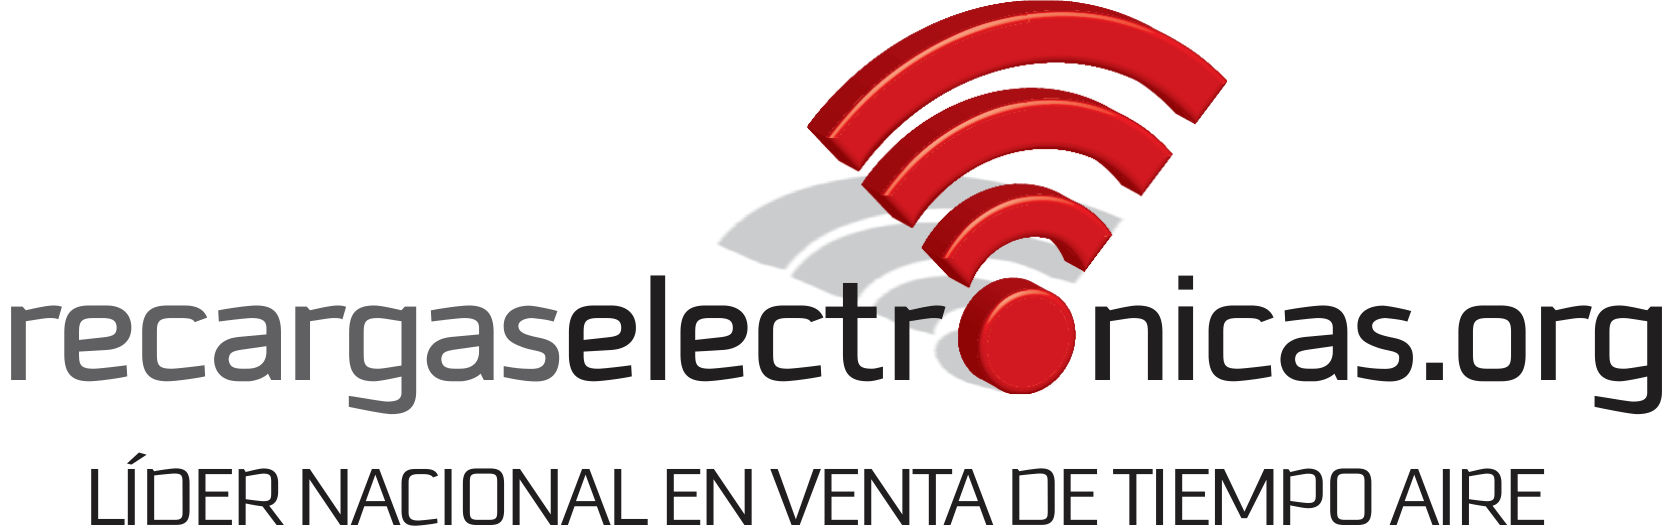 Vender Recargas Electronicas 7.5% Telcel en Tu Negocio Logo